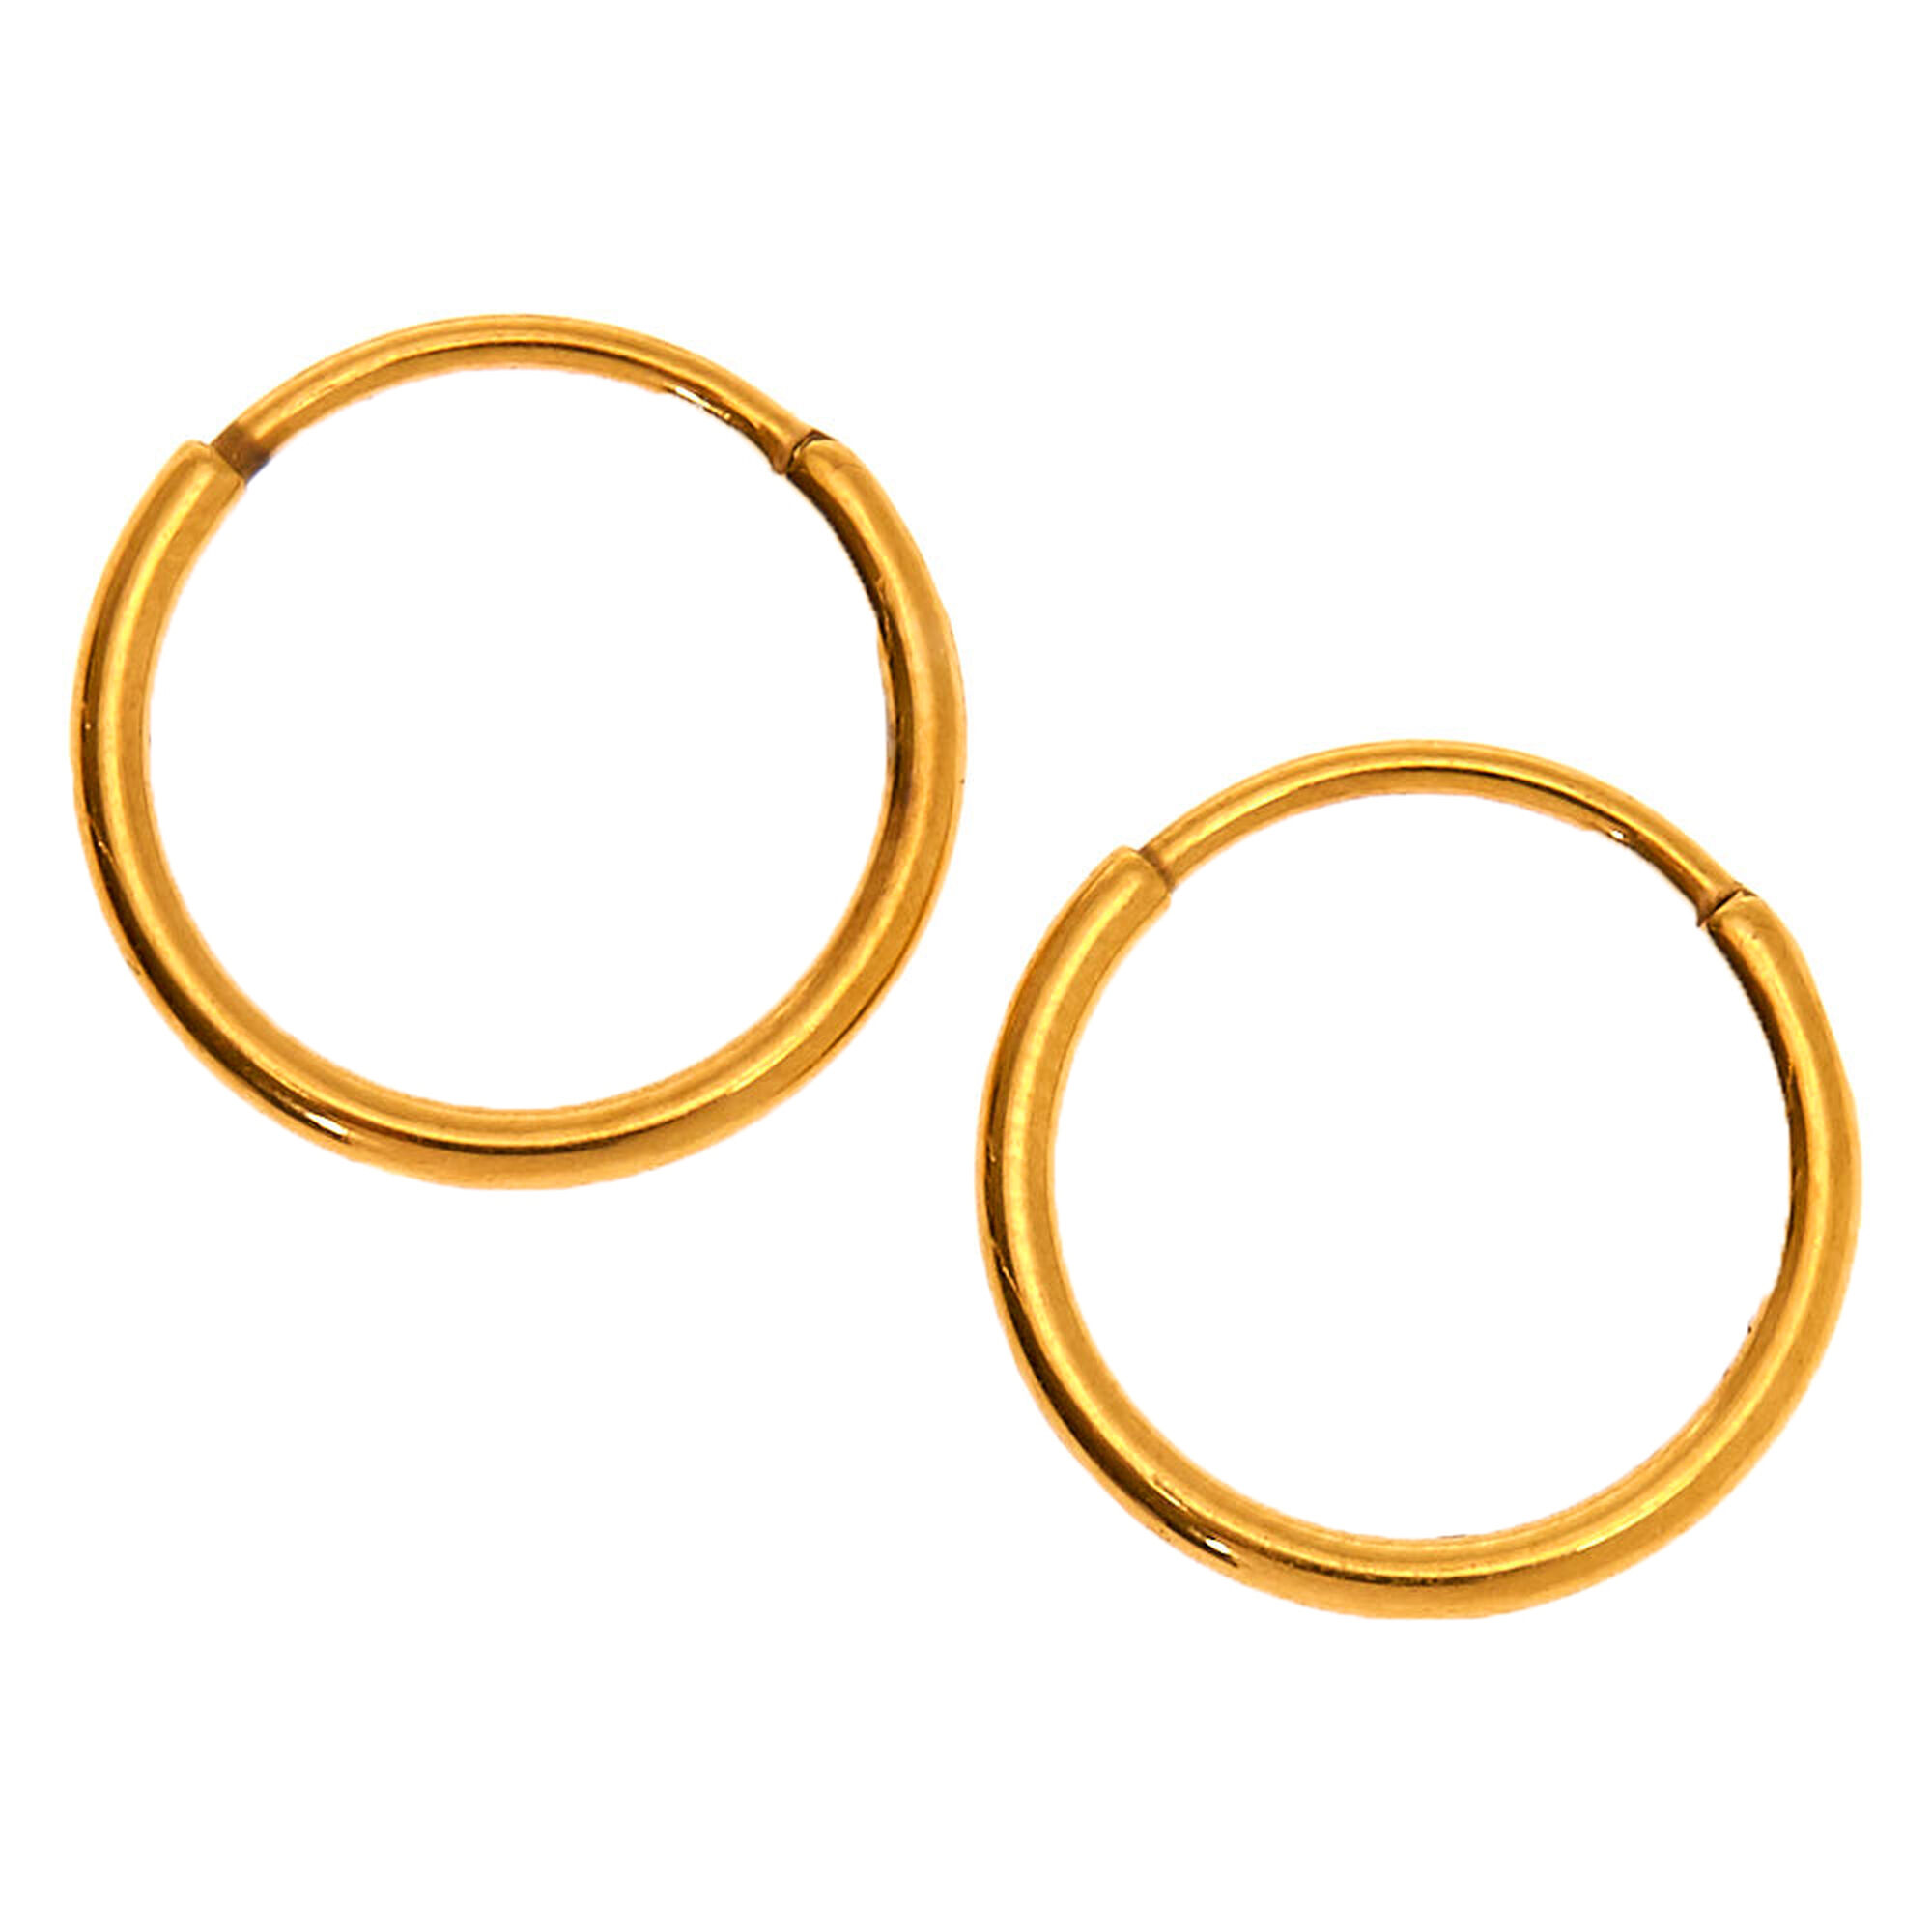 View Claires Titanium 10MM Sleek Hoop Earrings Gold information